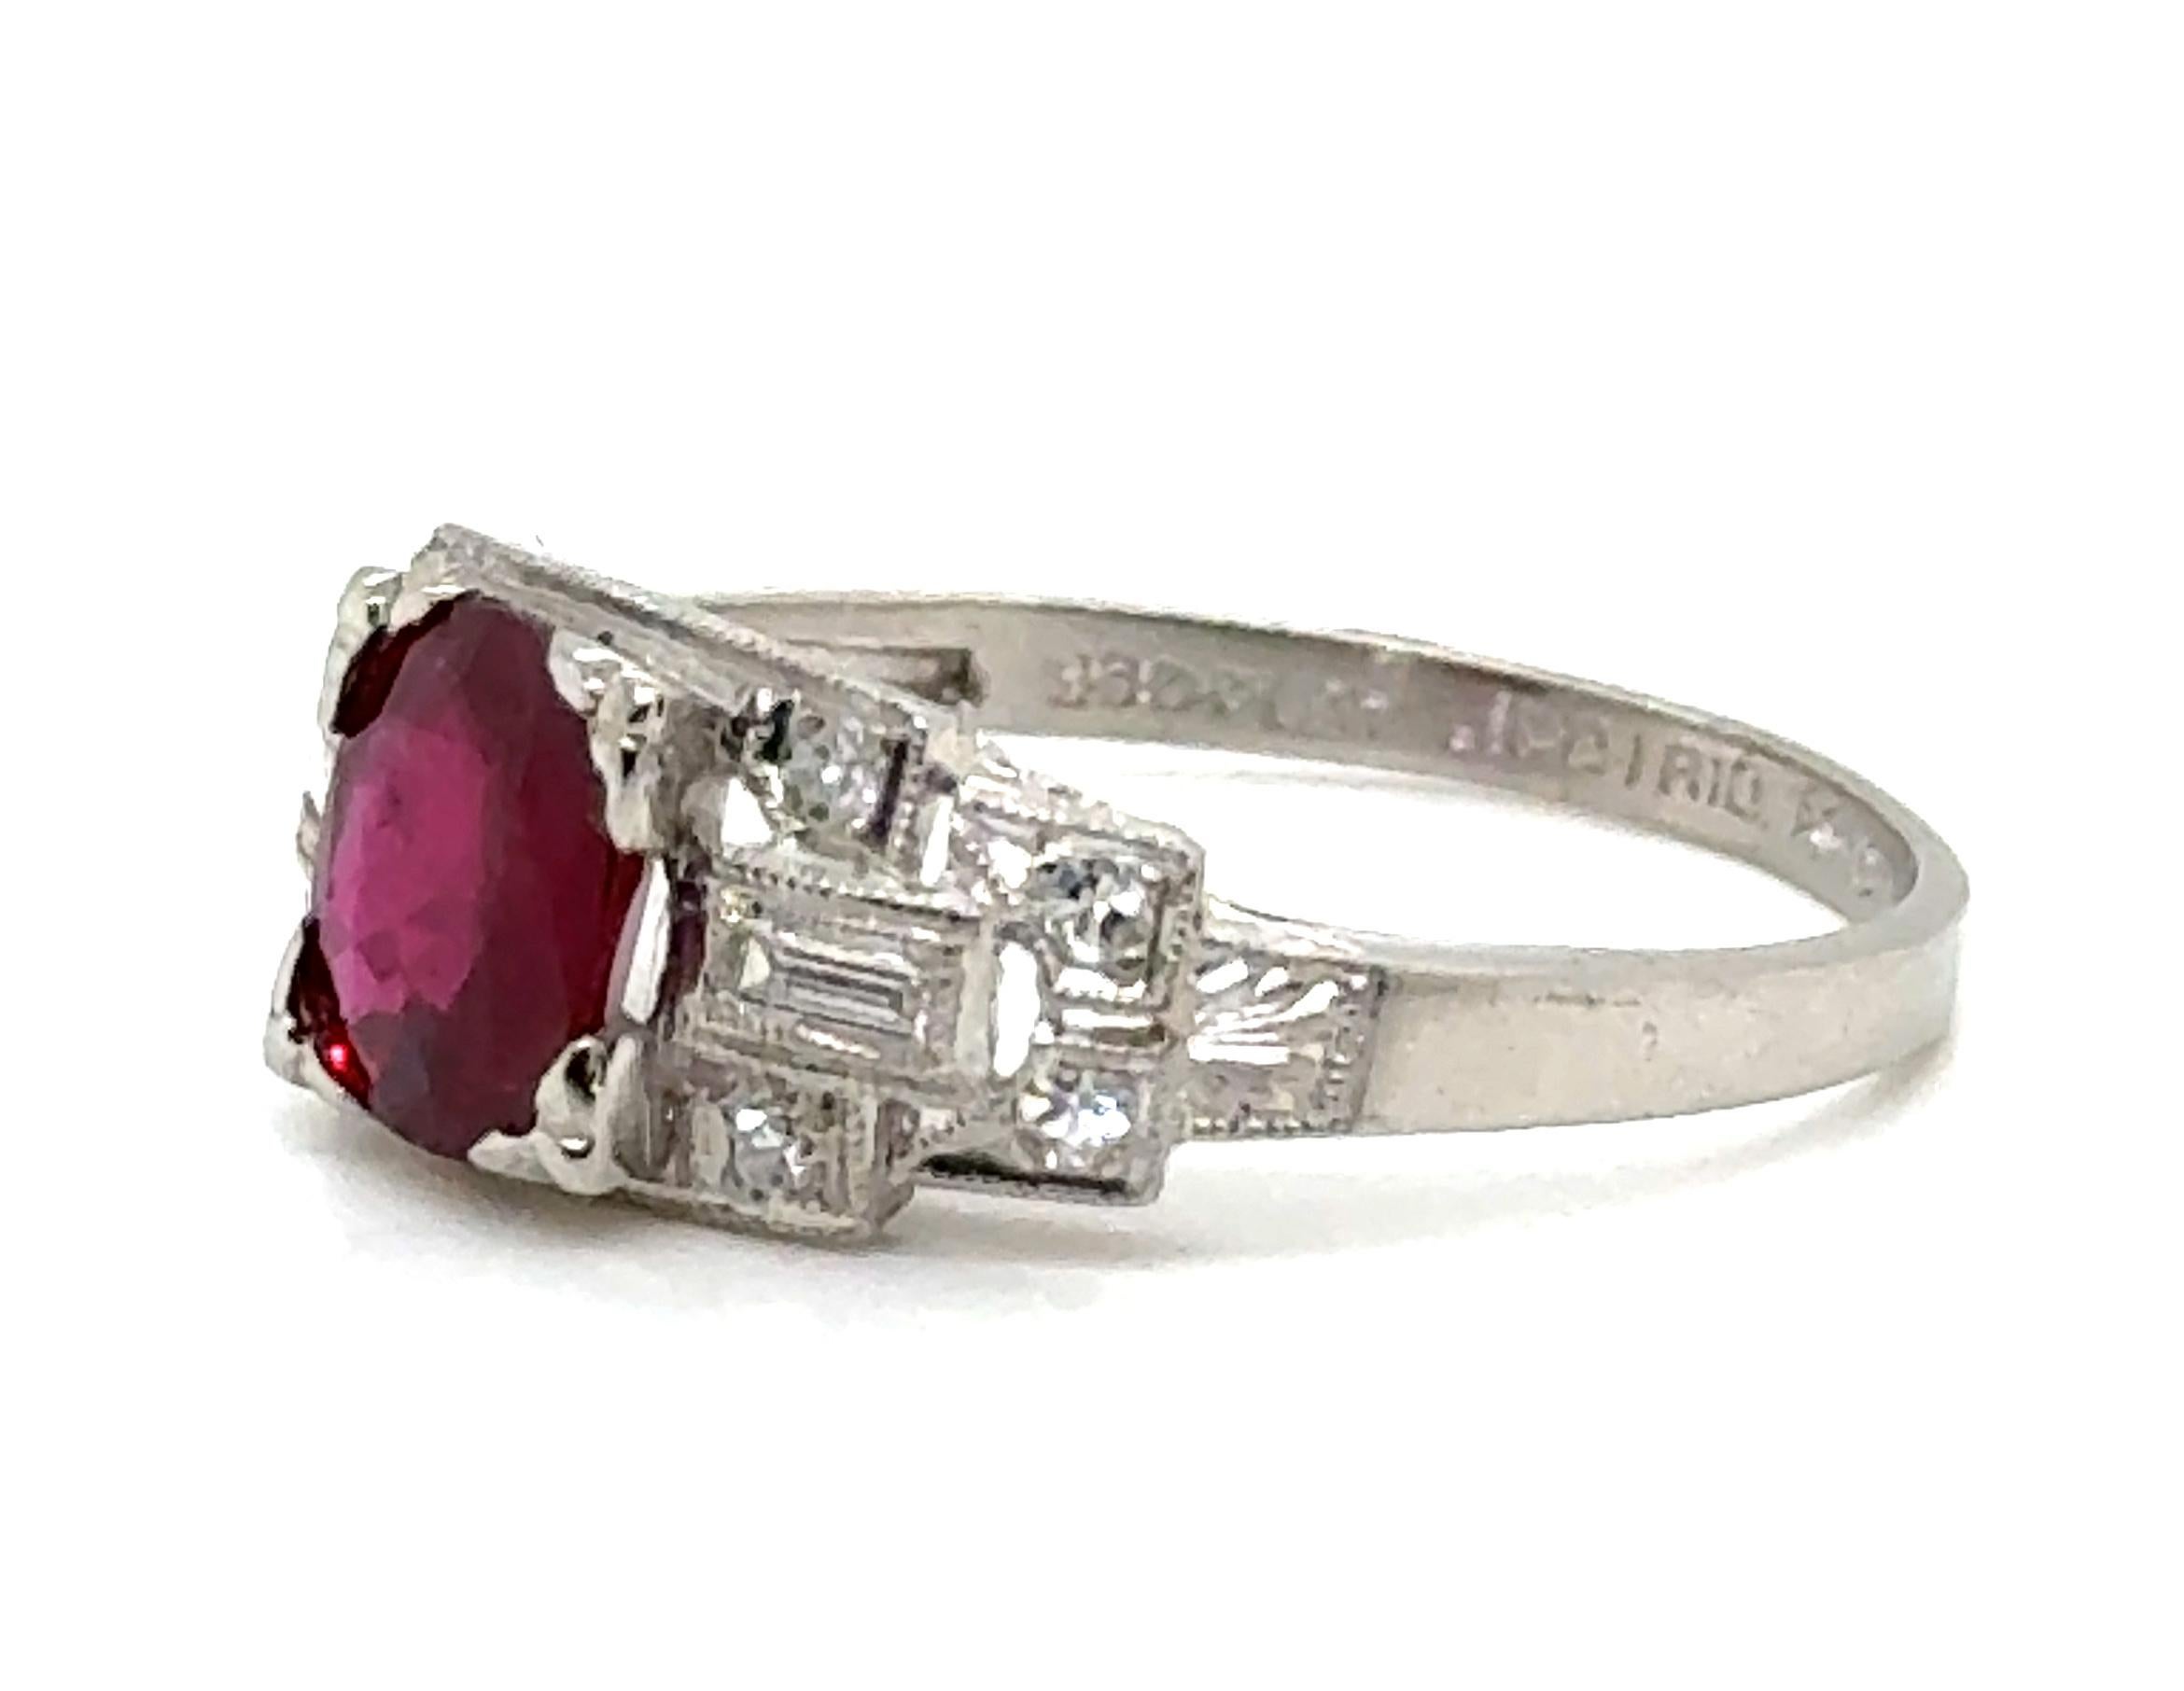 Art Deco Klebanoff & Grossman 1940's Antique GIA Natural Blood Red Ruby Diamond Ring Plat